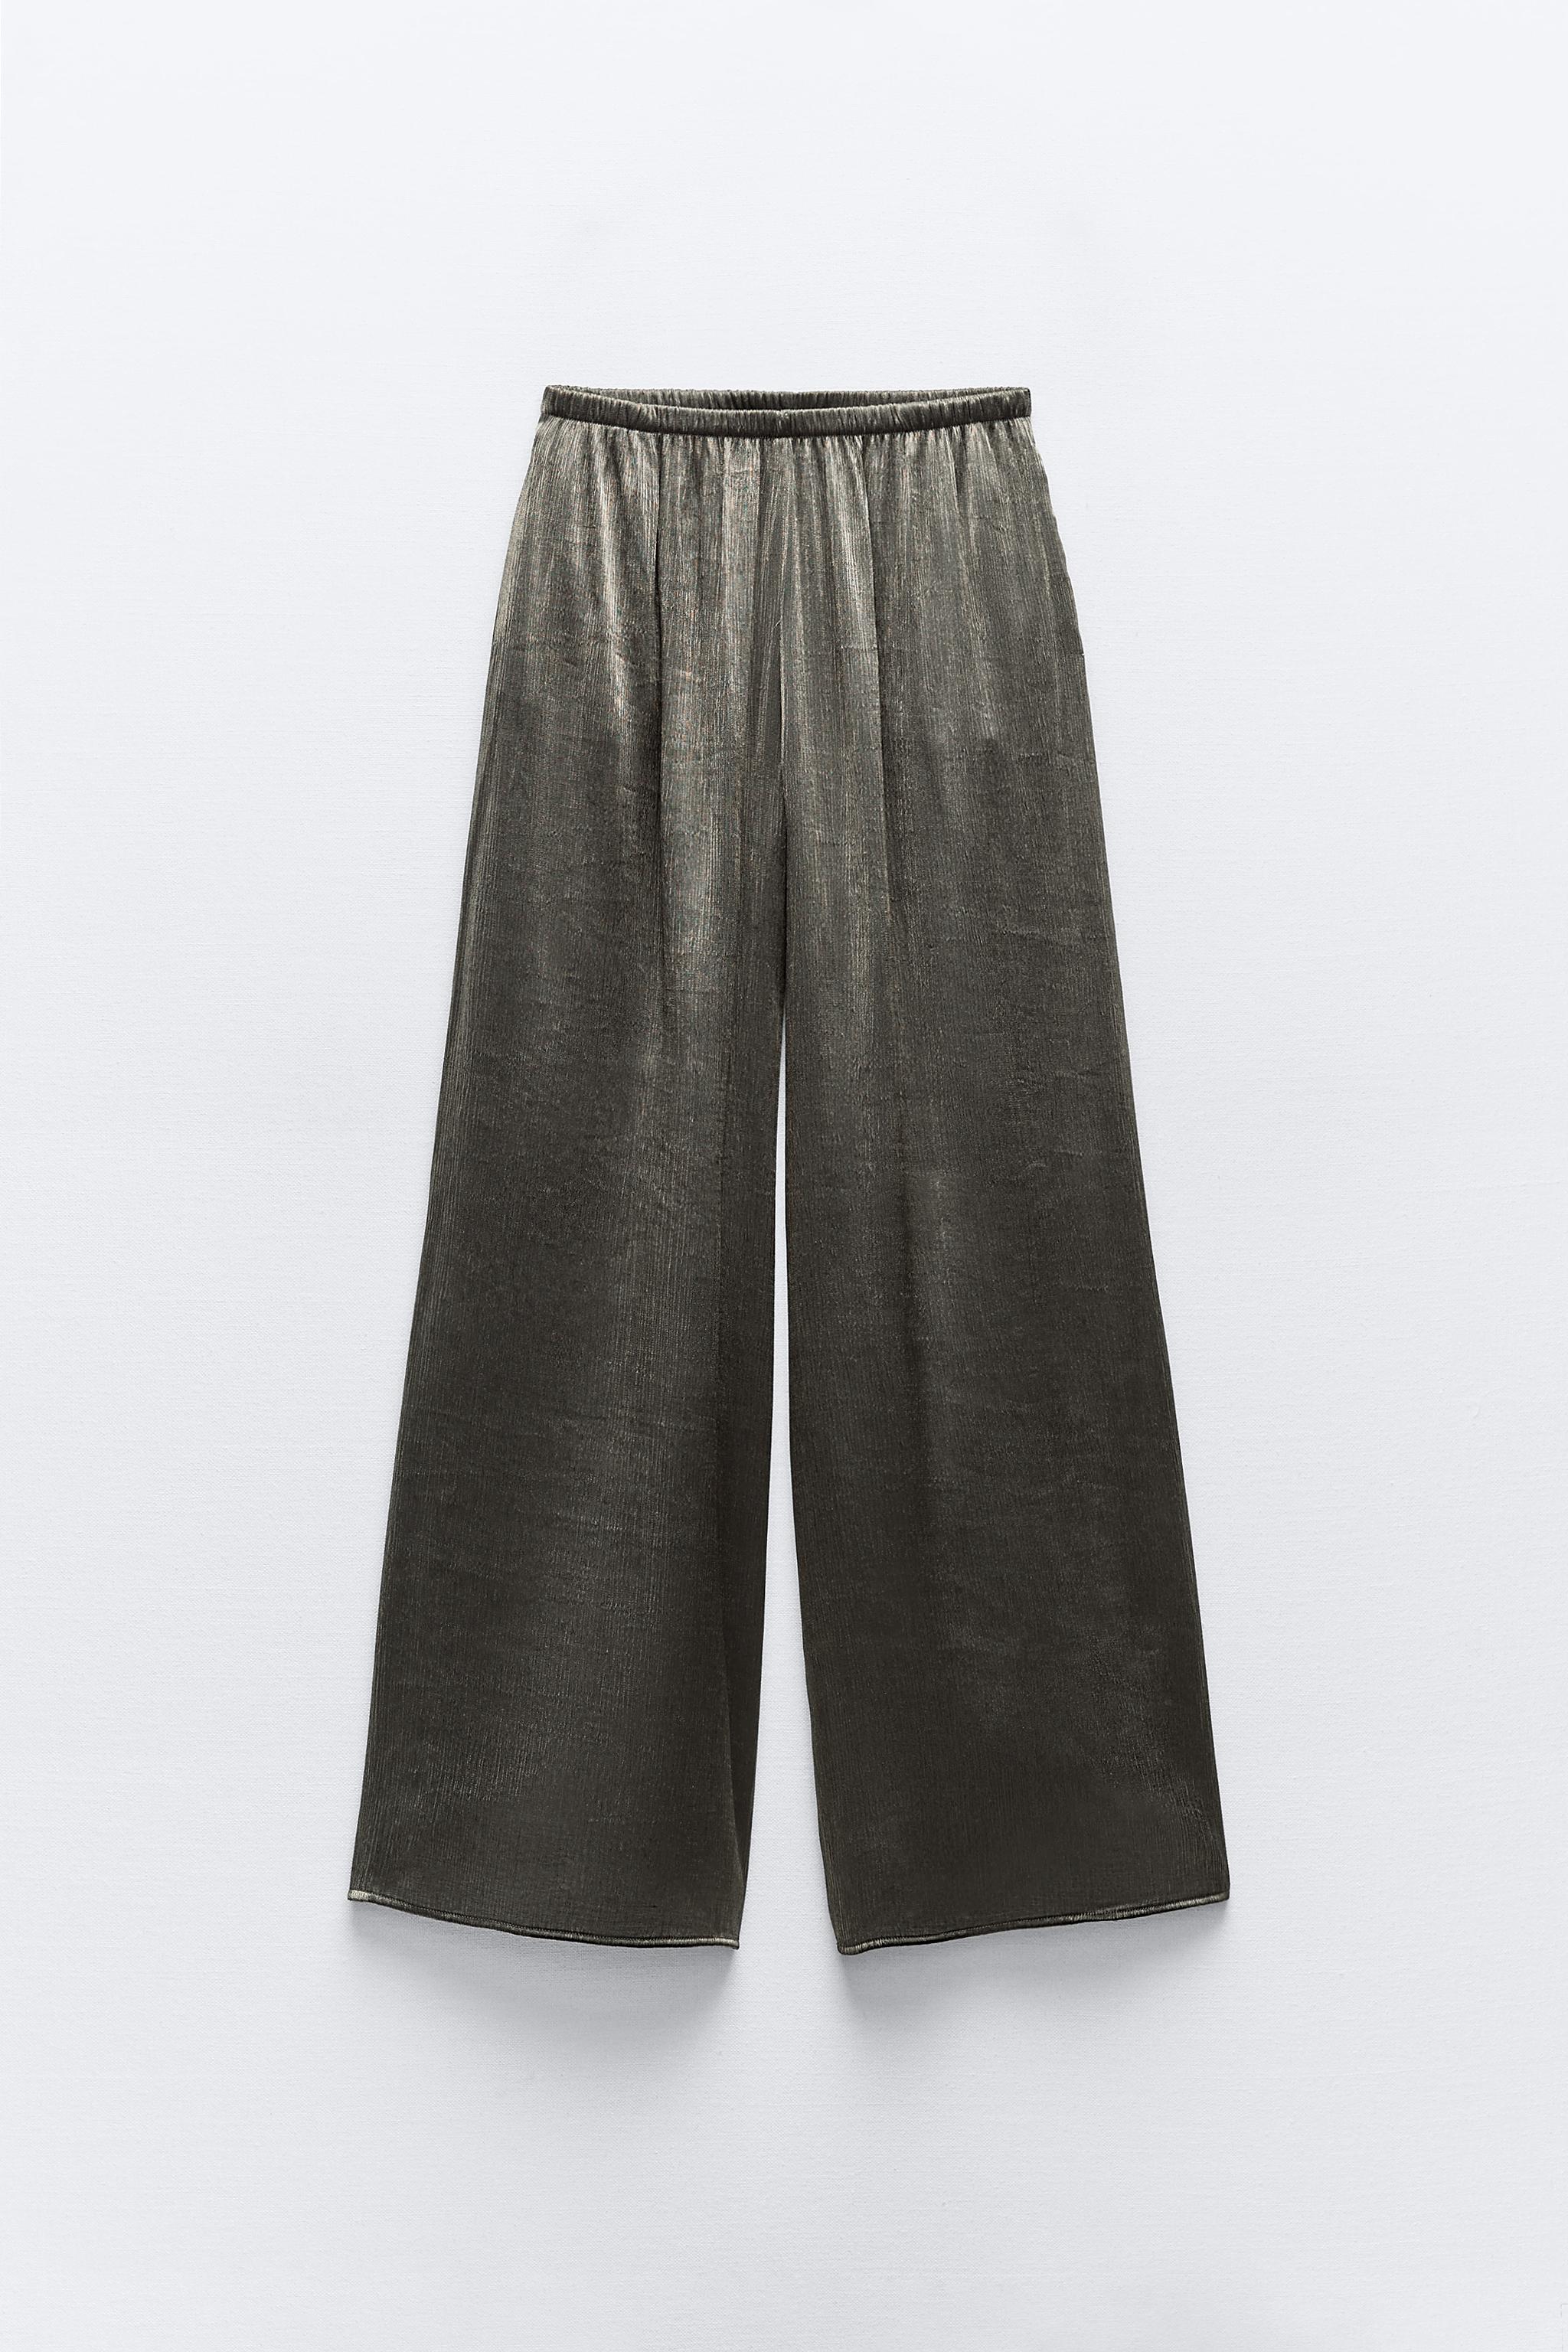 Zara Women Flared trousers 2359/703/704 (Large): Buy Online at Best Price  in UAE 